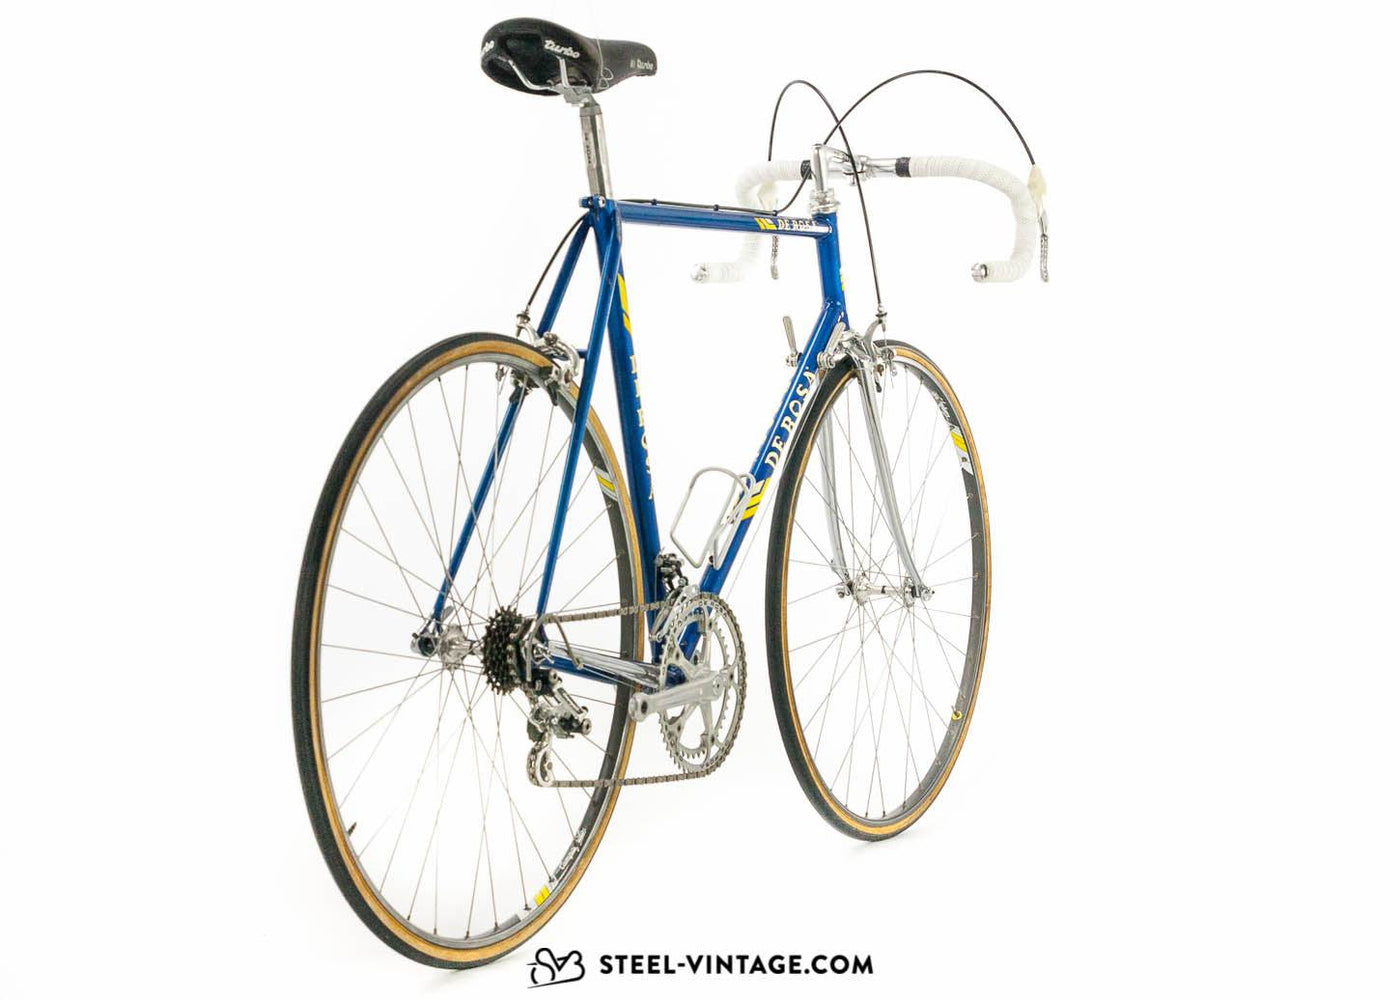 De Rosa Professional SLX Vintage Bike 1980s - Steel Vintage Bikes